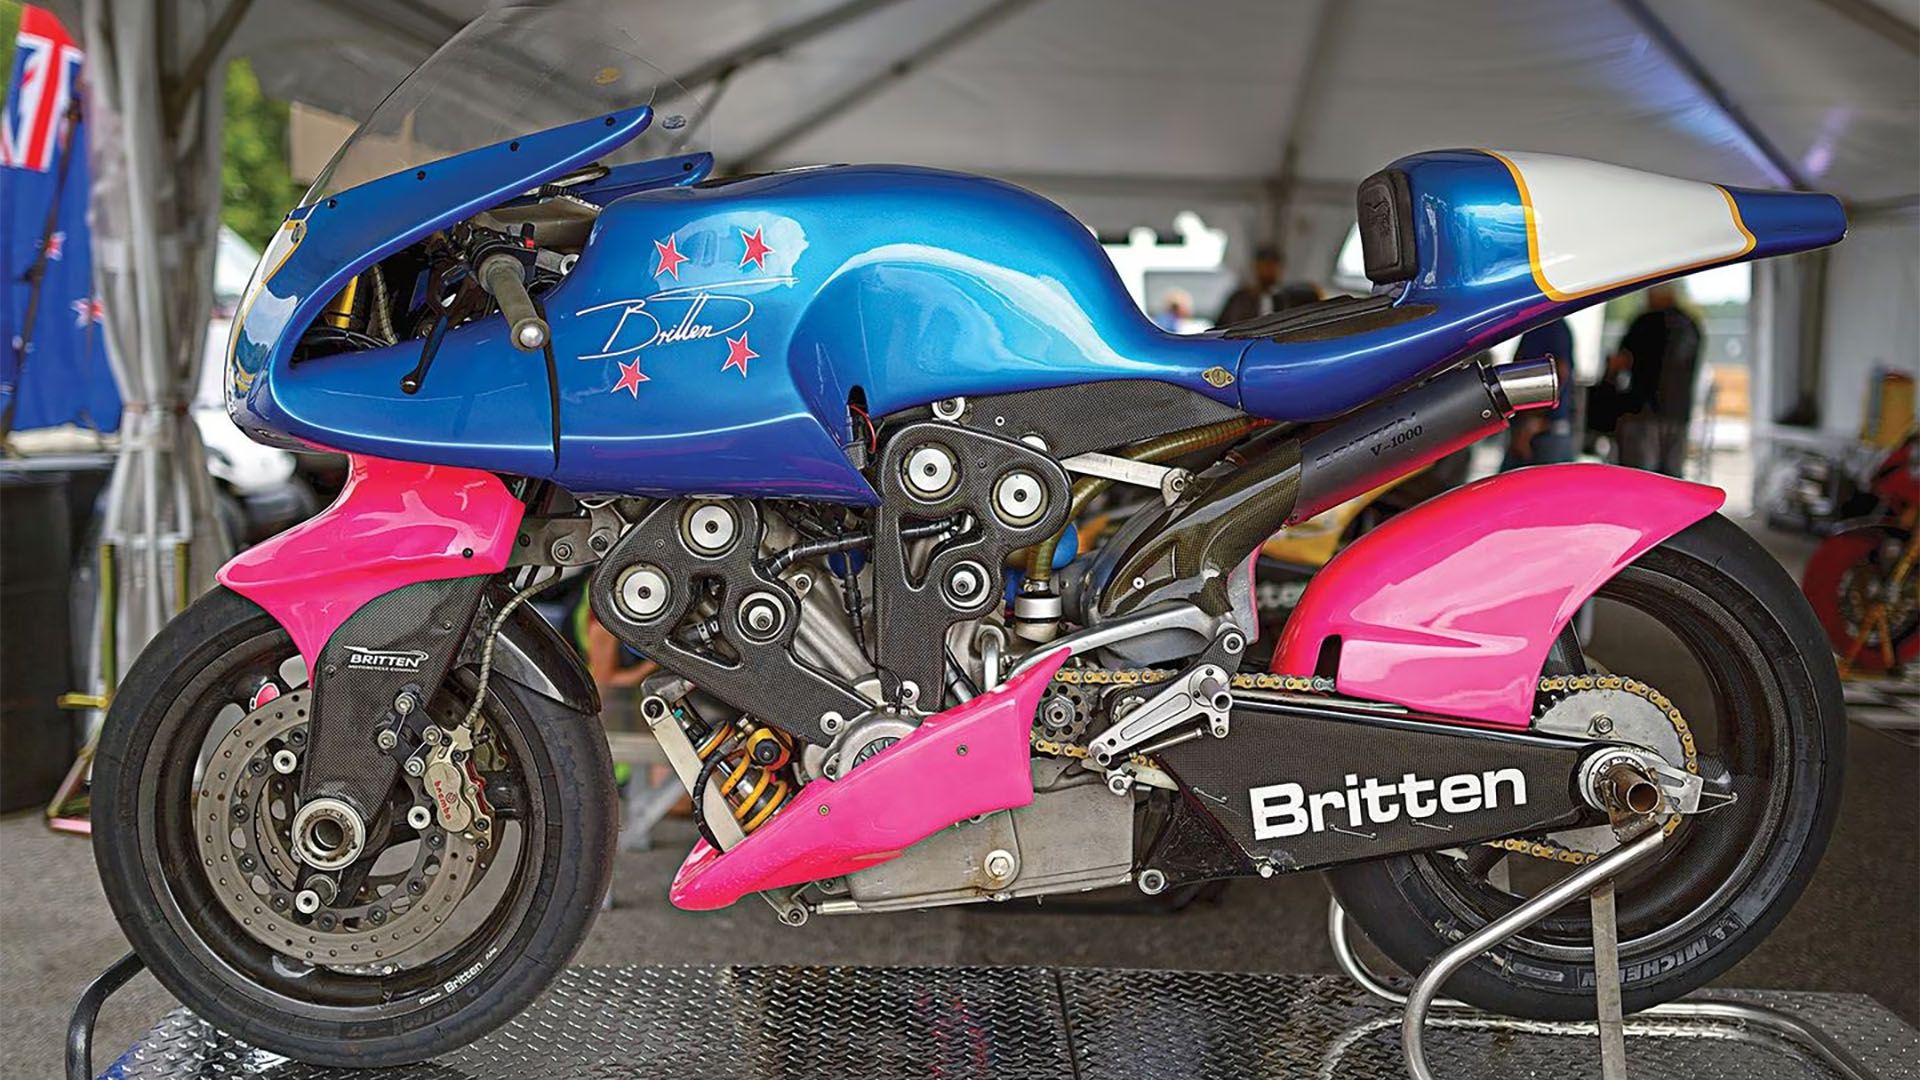 John Britten's V-1000 Motorcyle